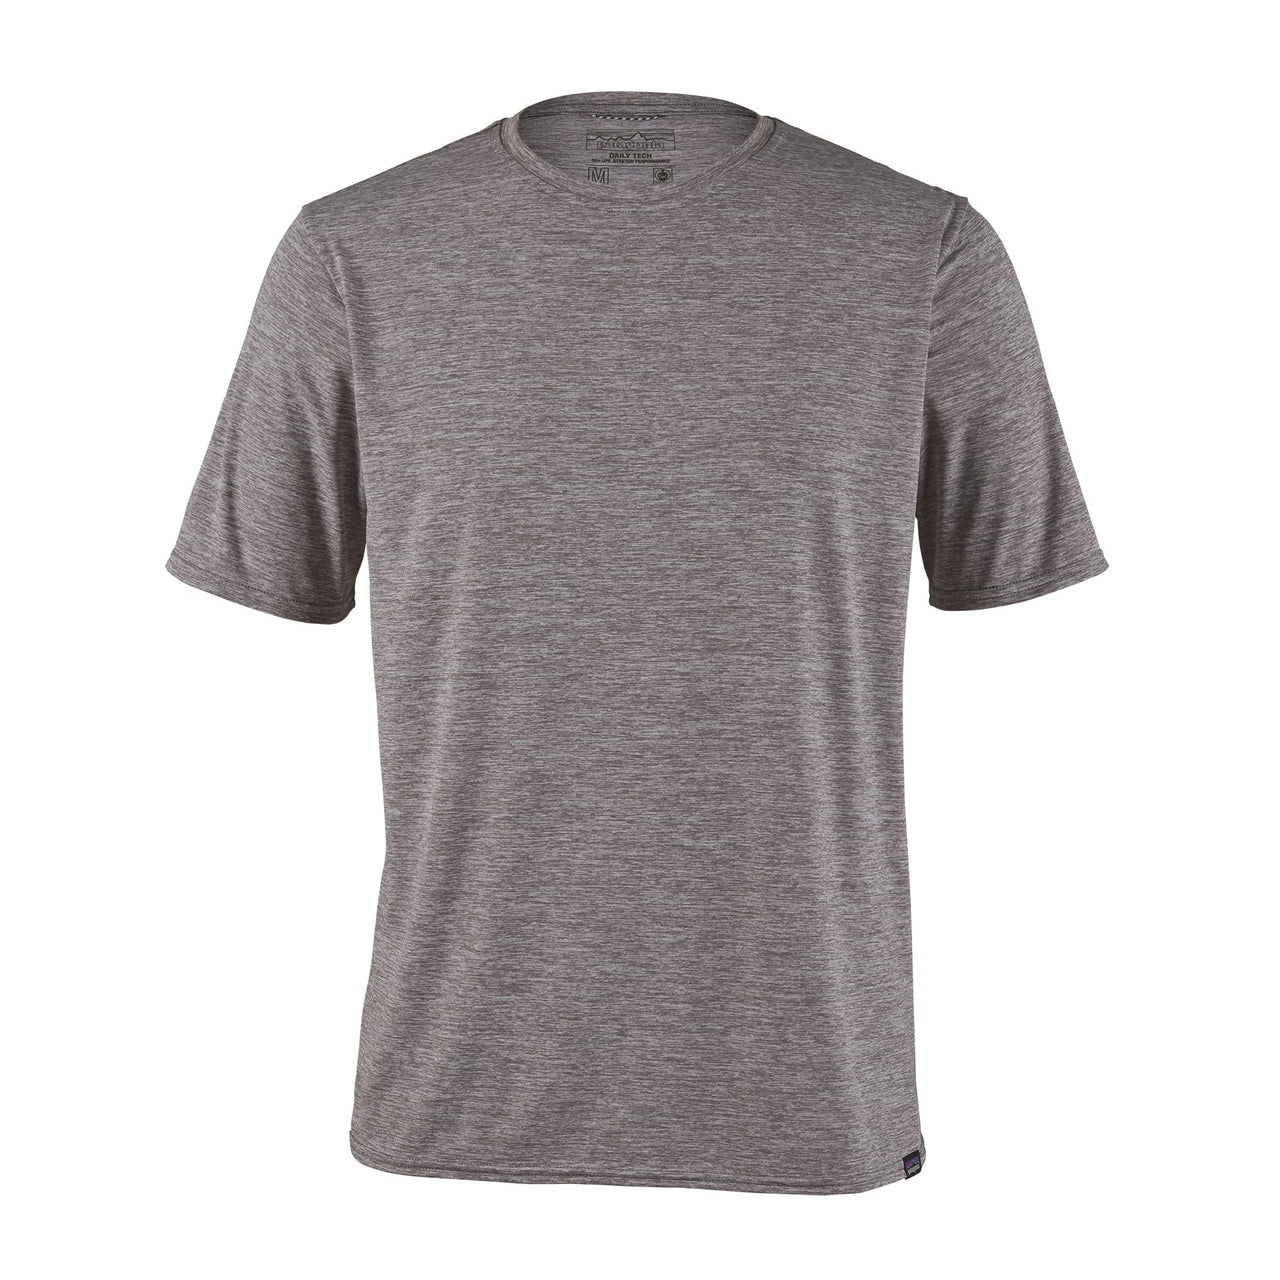 Men's Cap Cool Daily Shirt 45215